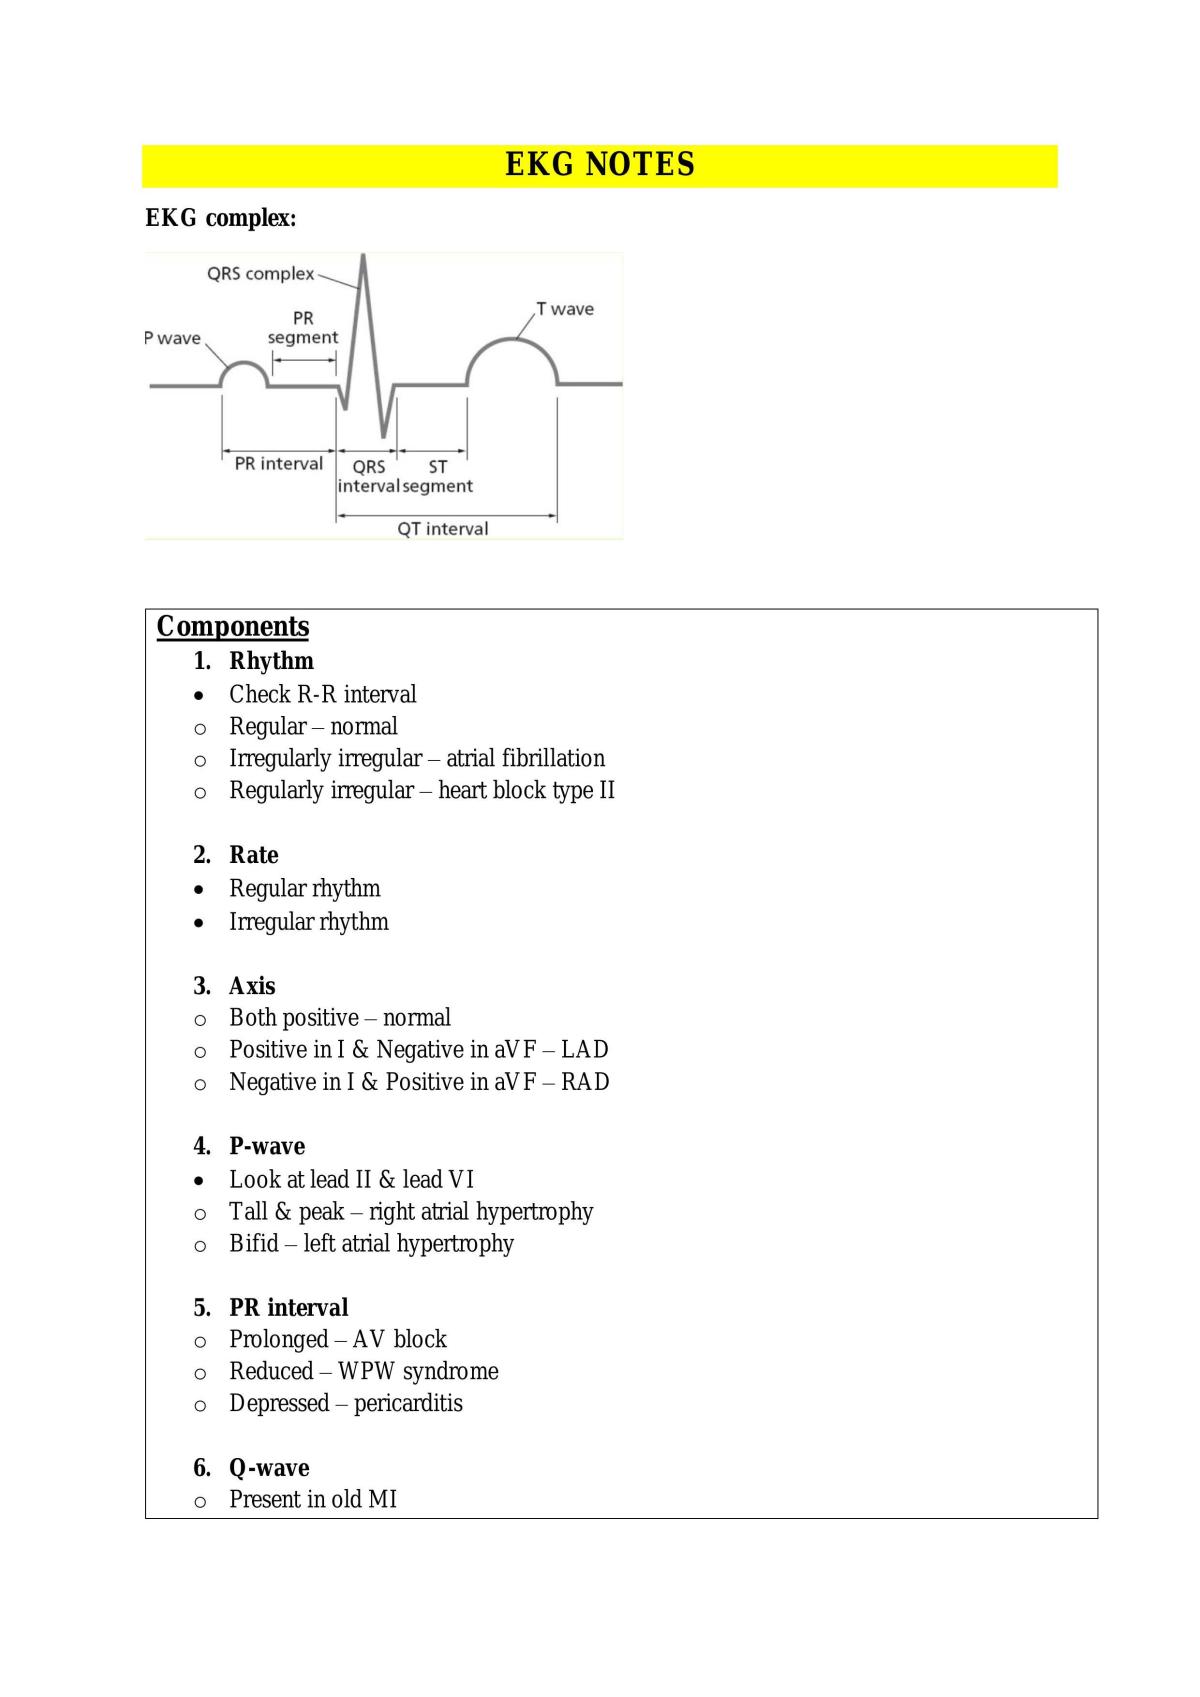 Electrocardiogram (EKG) Notes - Page 1